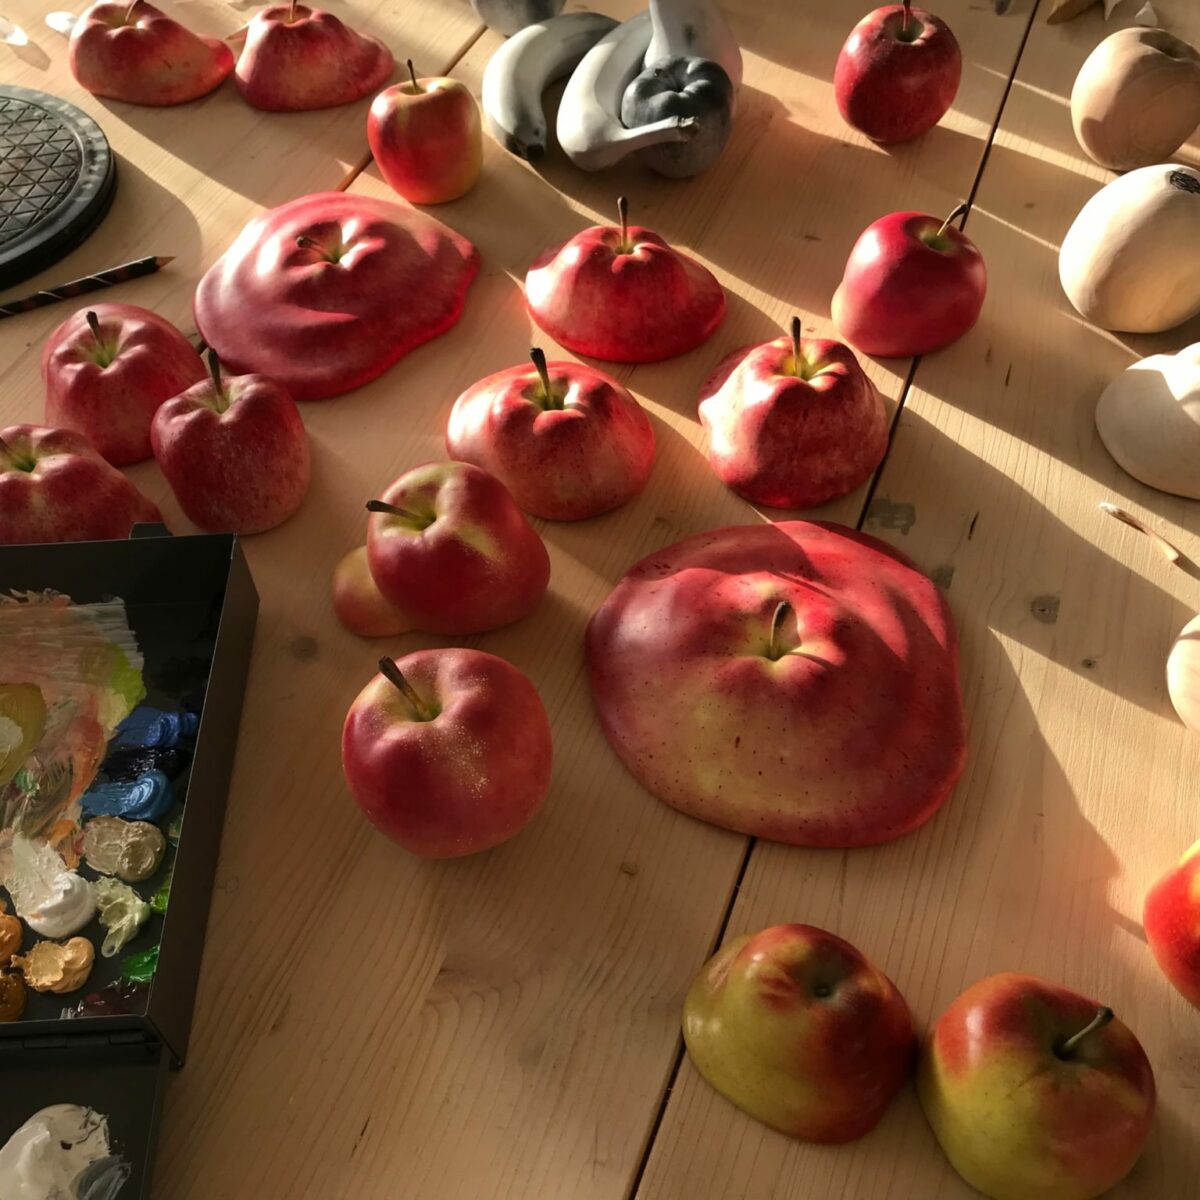 Melting Apples Surreal Hyper Realistic Wood Sculptures By Yosuke Amemiya 2